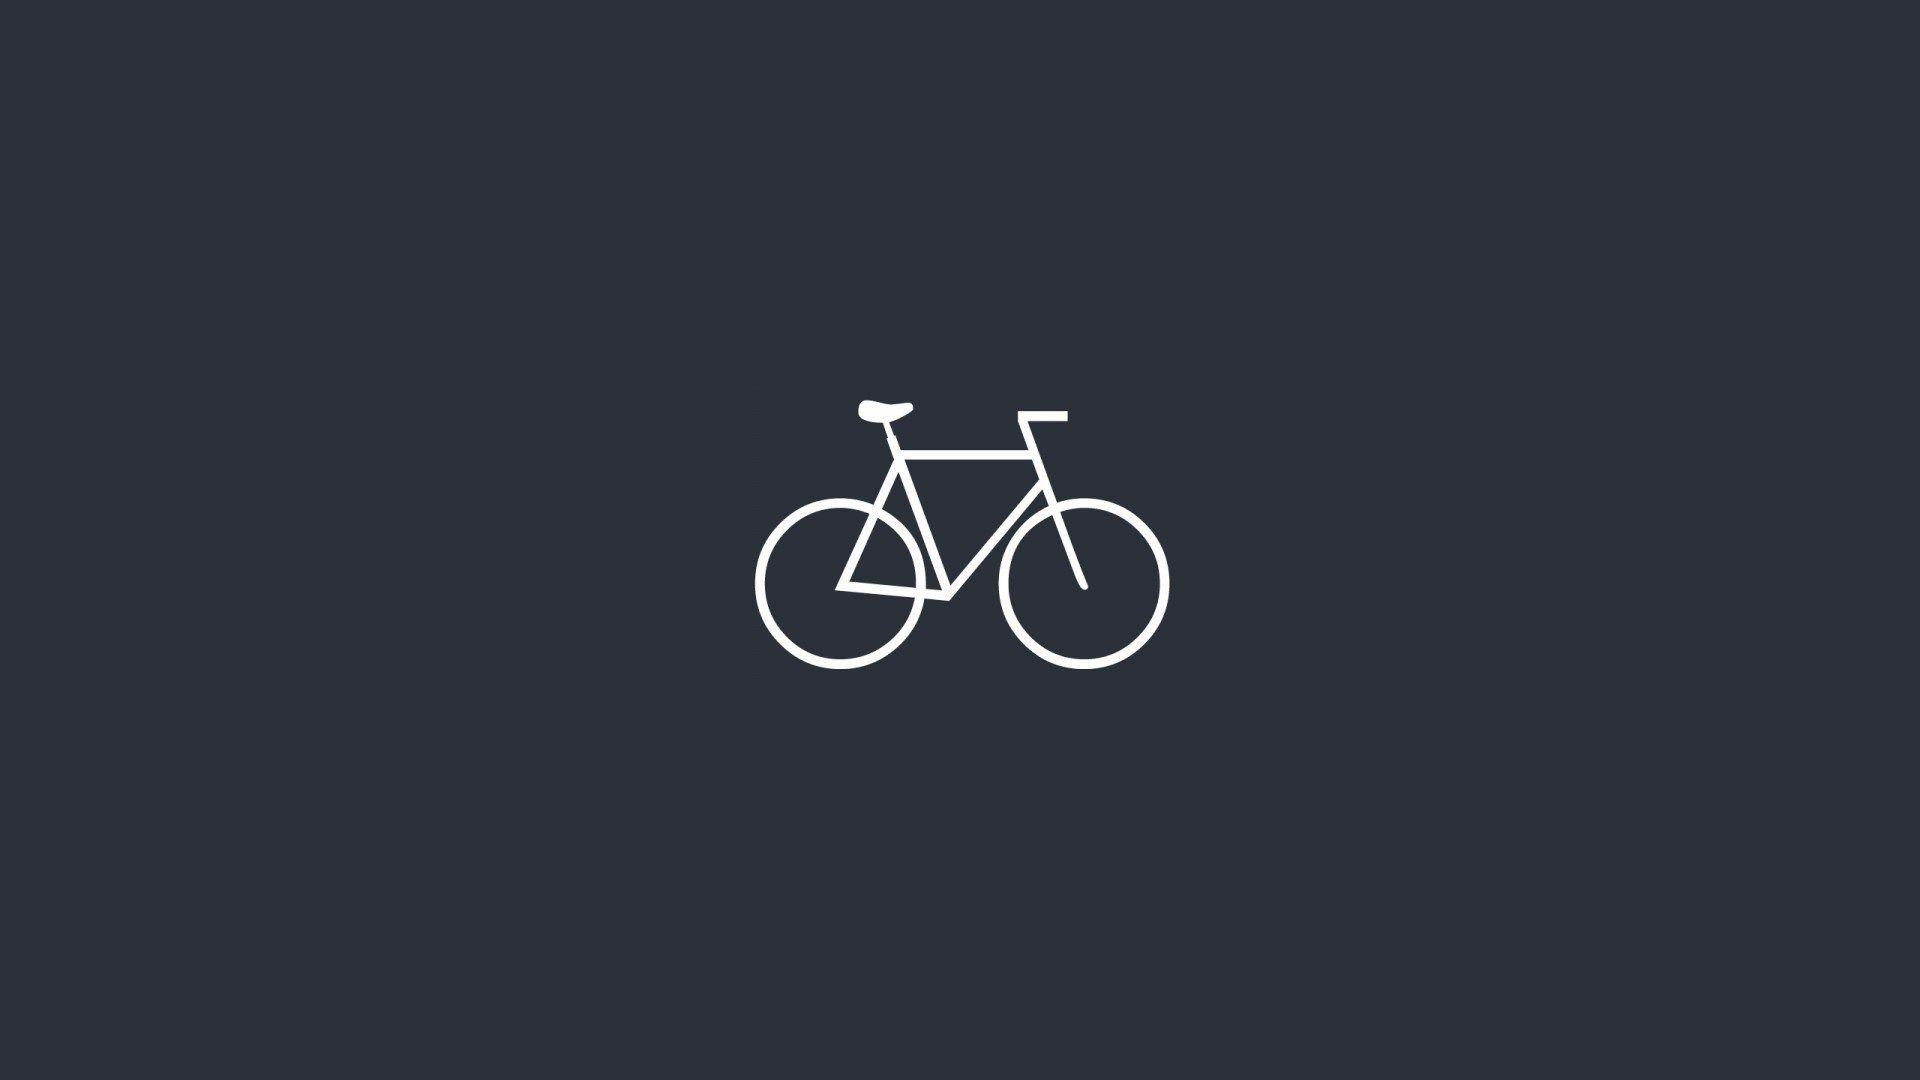 Bicycle wallpaper .com